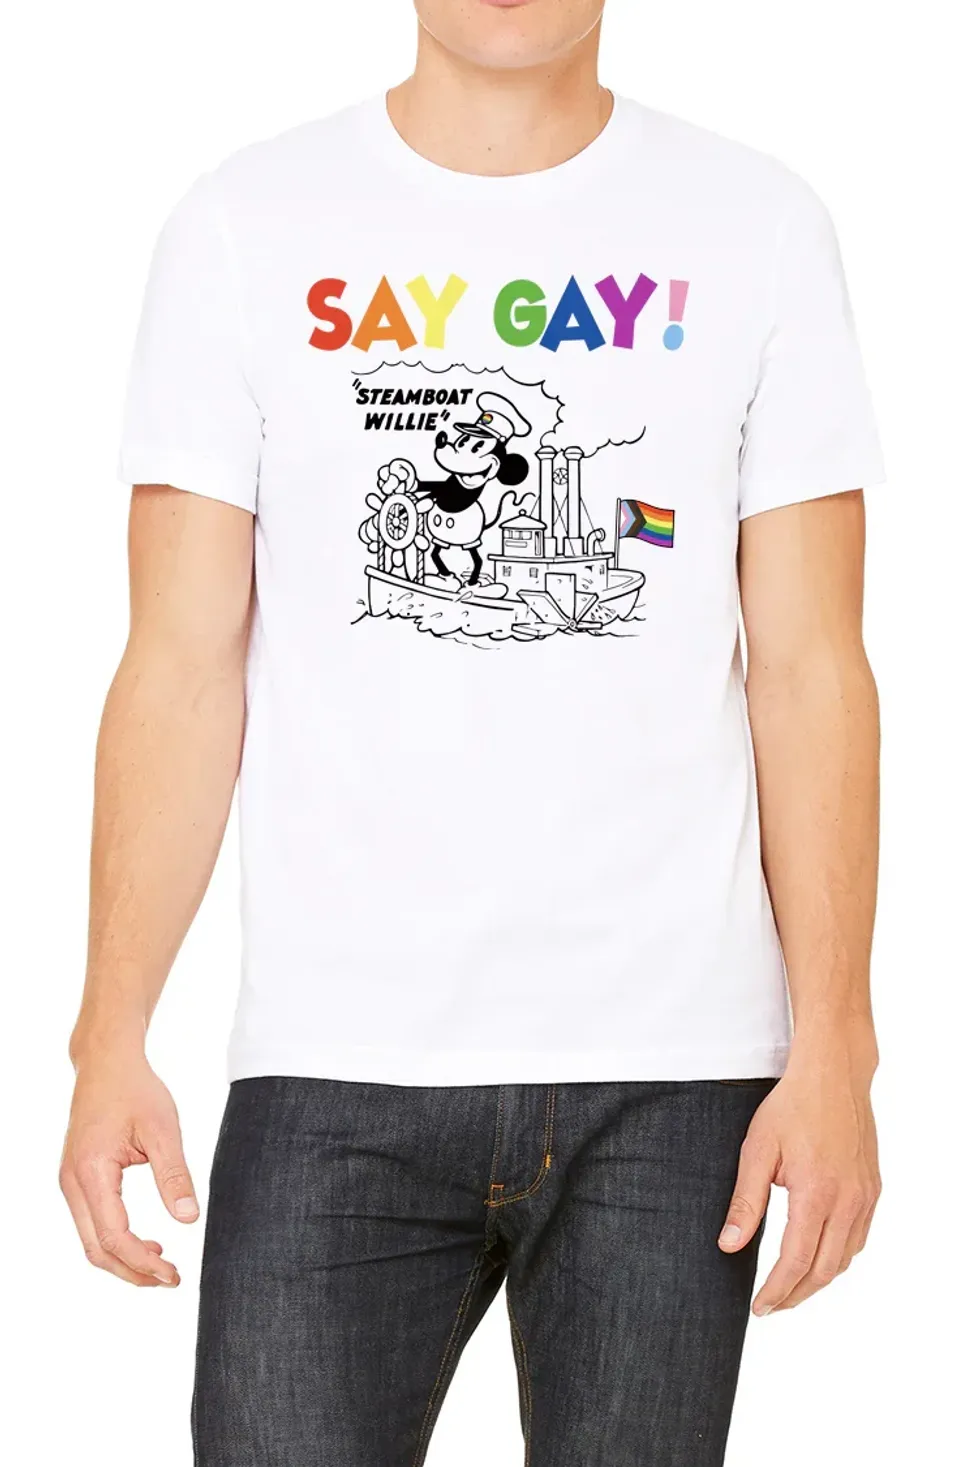 Print Bar - SAY GAY STEAMBOAT WILLIE MICKEY